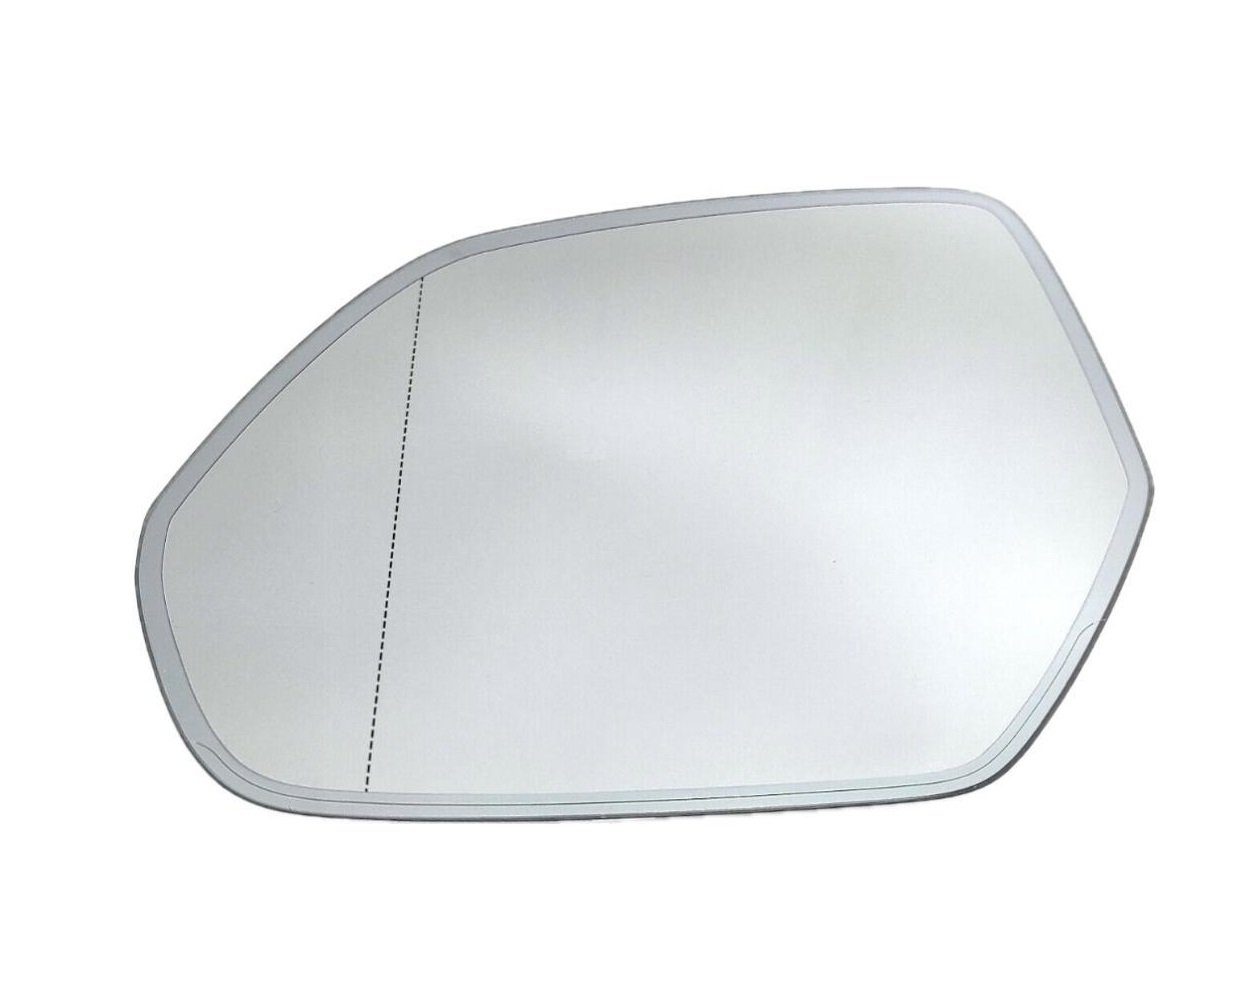 Audi Autospiegel Original Q8 SQ8 Spiegel Spiegelglas Elektrochrom  Abblendbar links